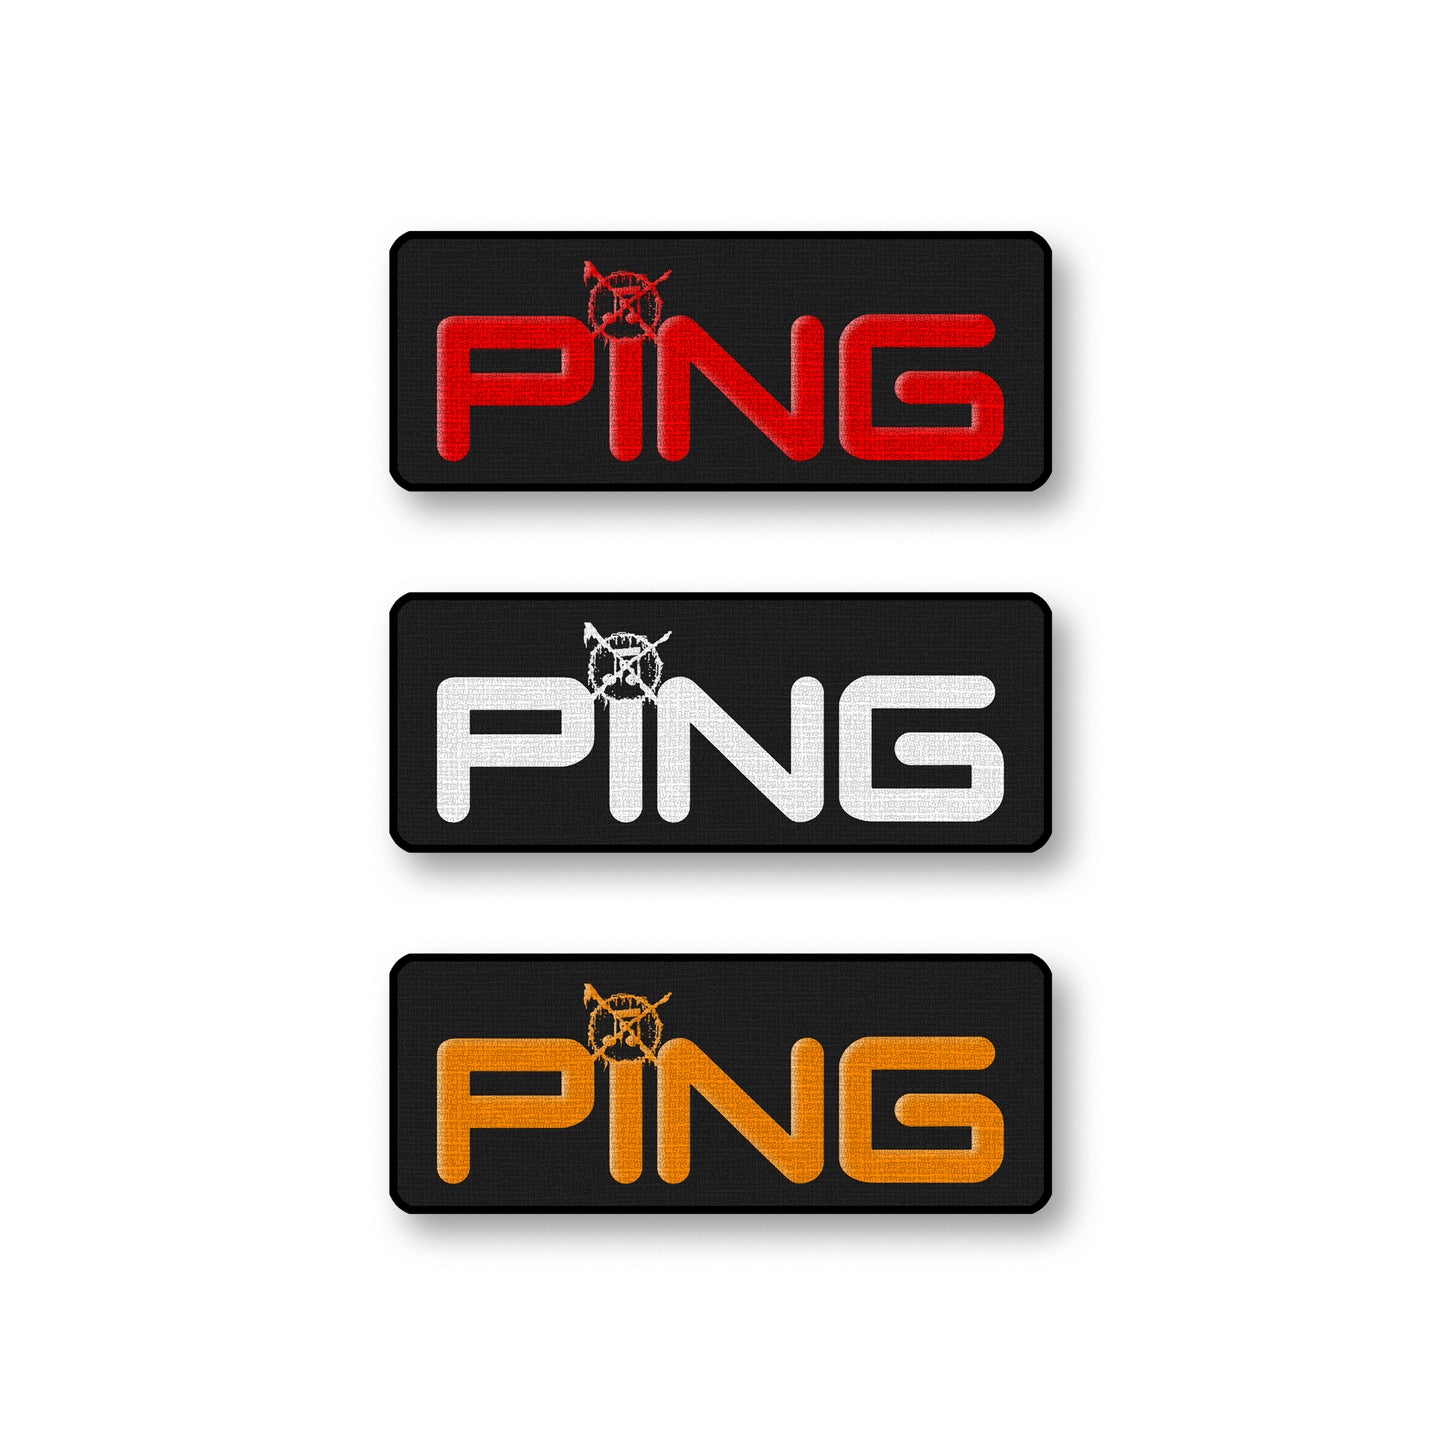 Ping "Logo" PATCH